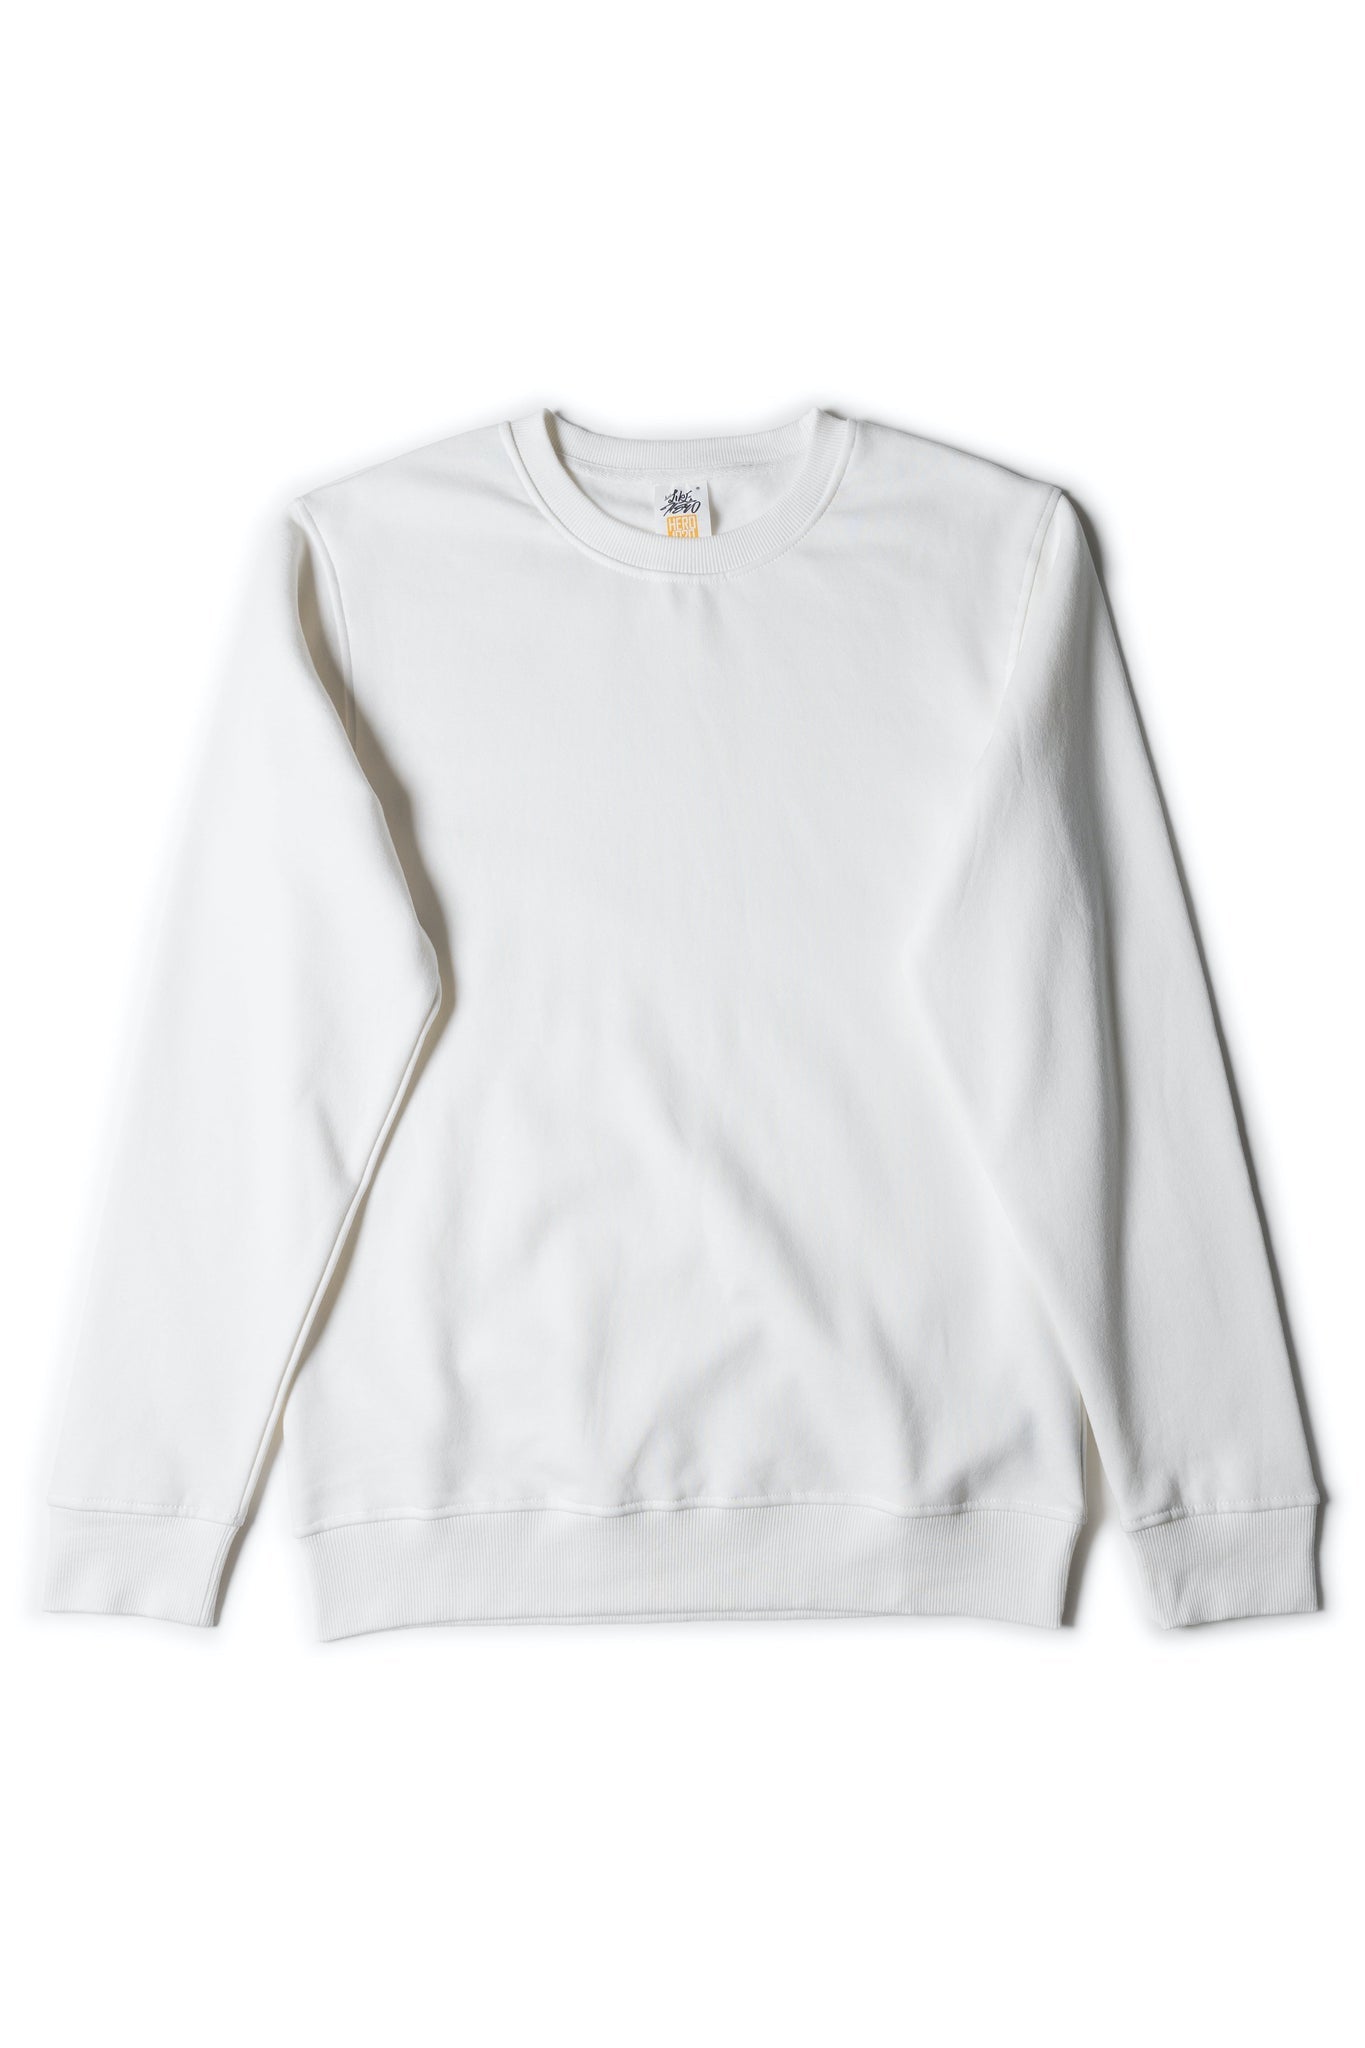 HERO - 1020 Unisex Blank Crewneck Sweatshirt - White